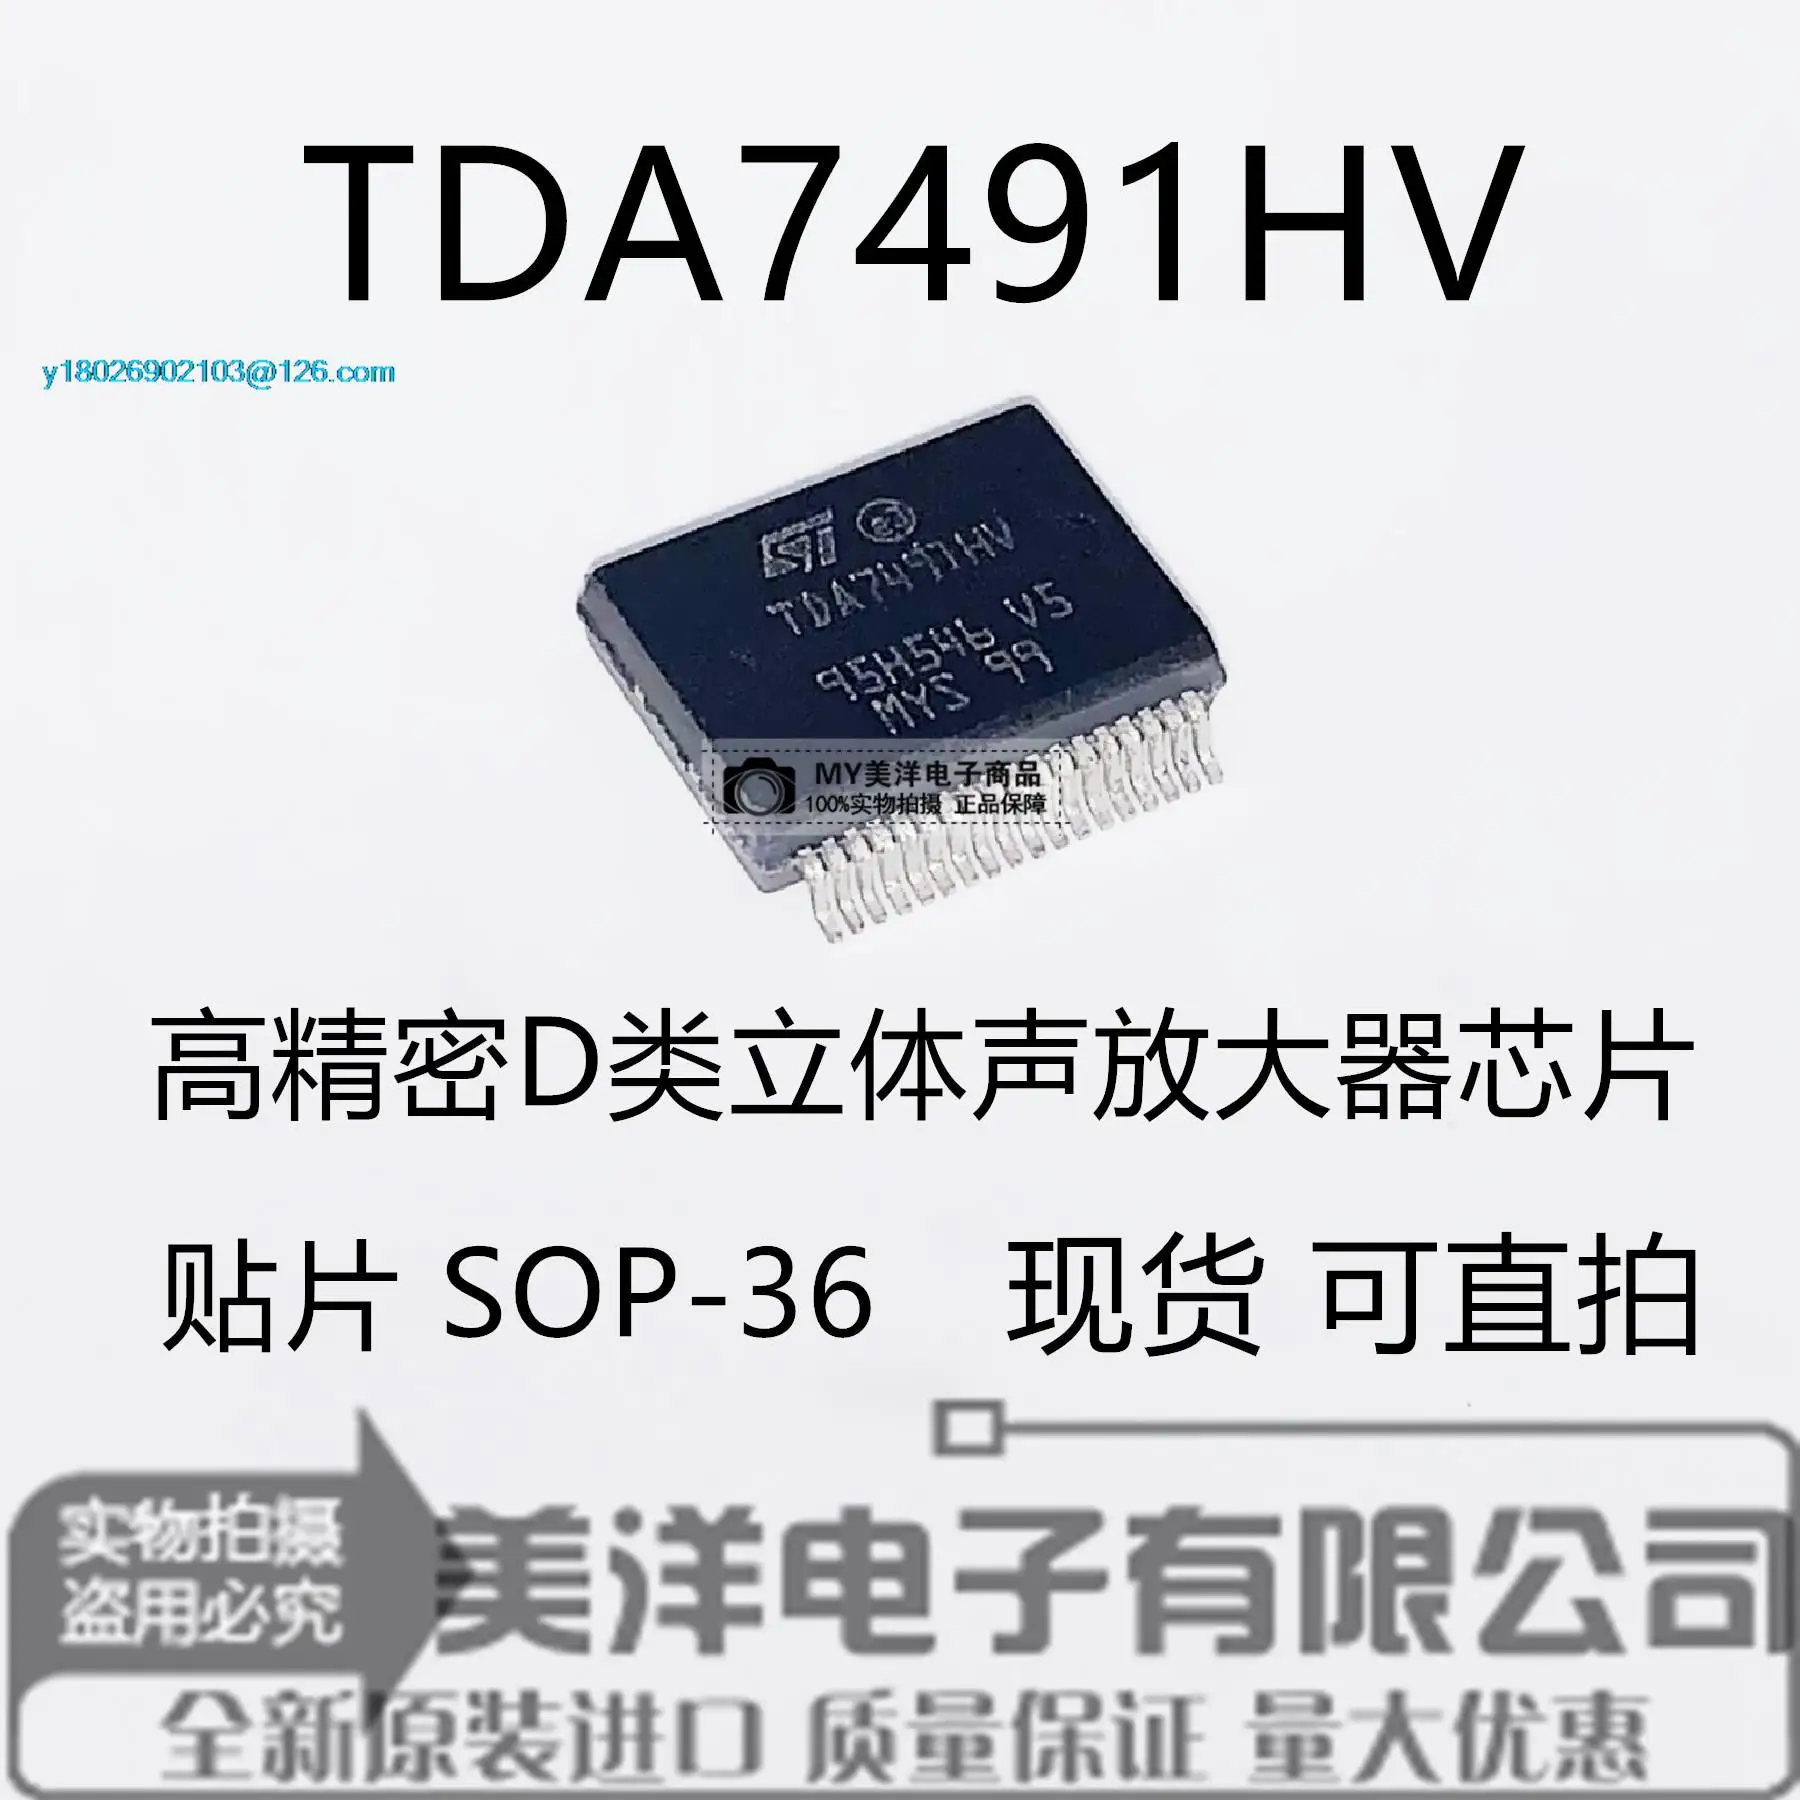 

TDA7491HV TDA7491HV13TR SSOP-36 Power Supply Chip IC